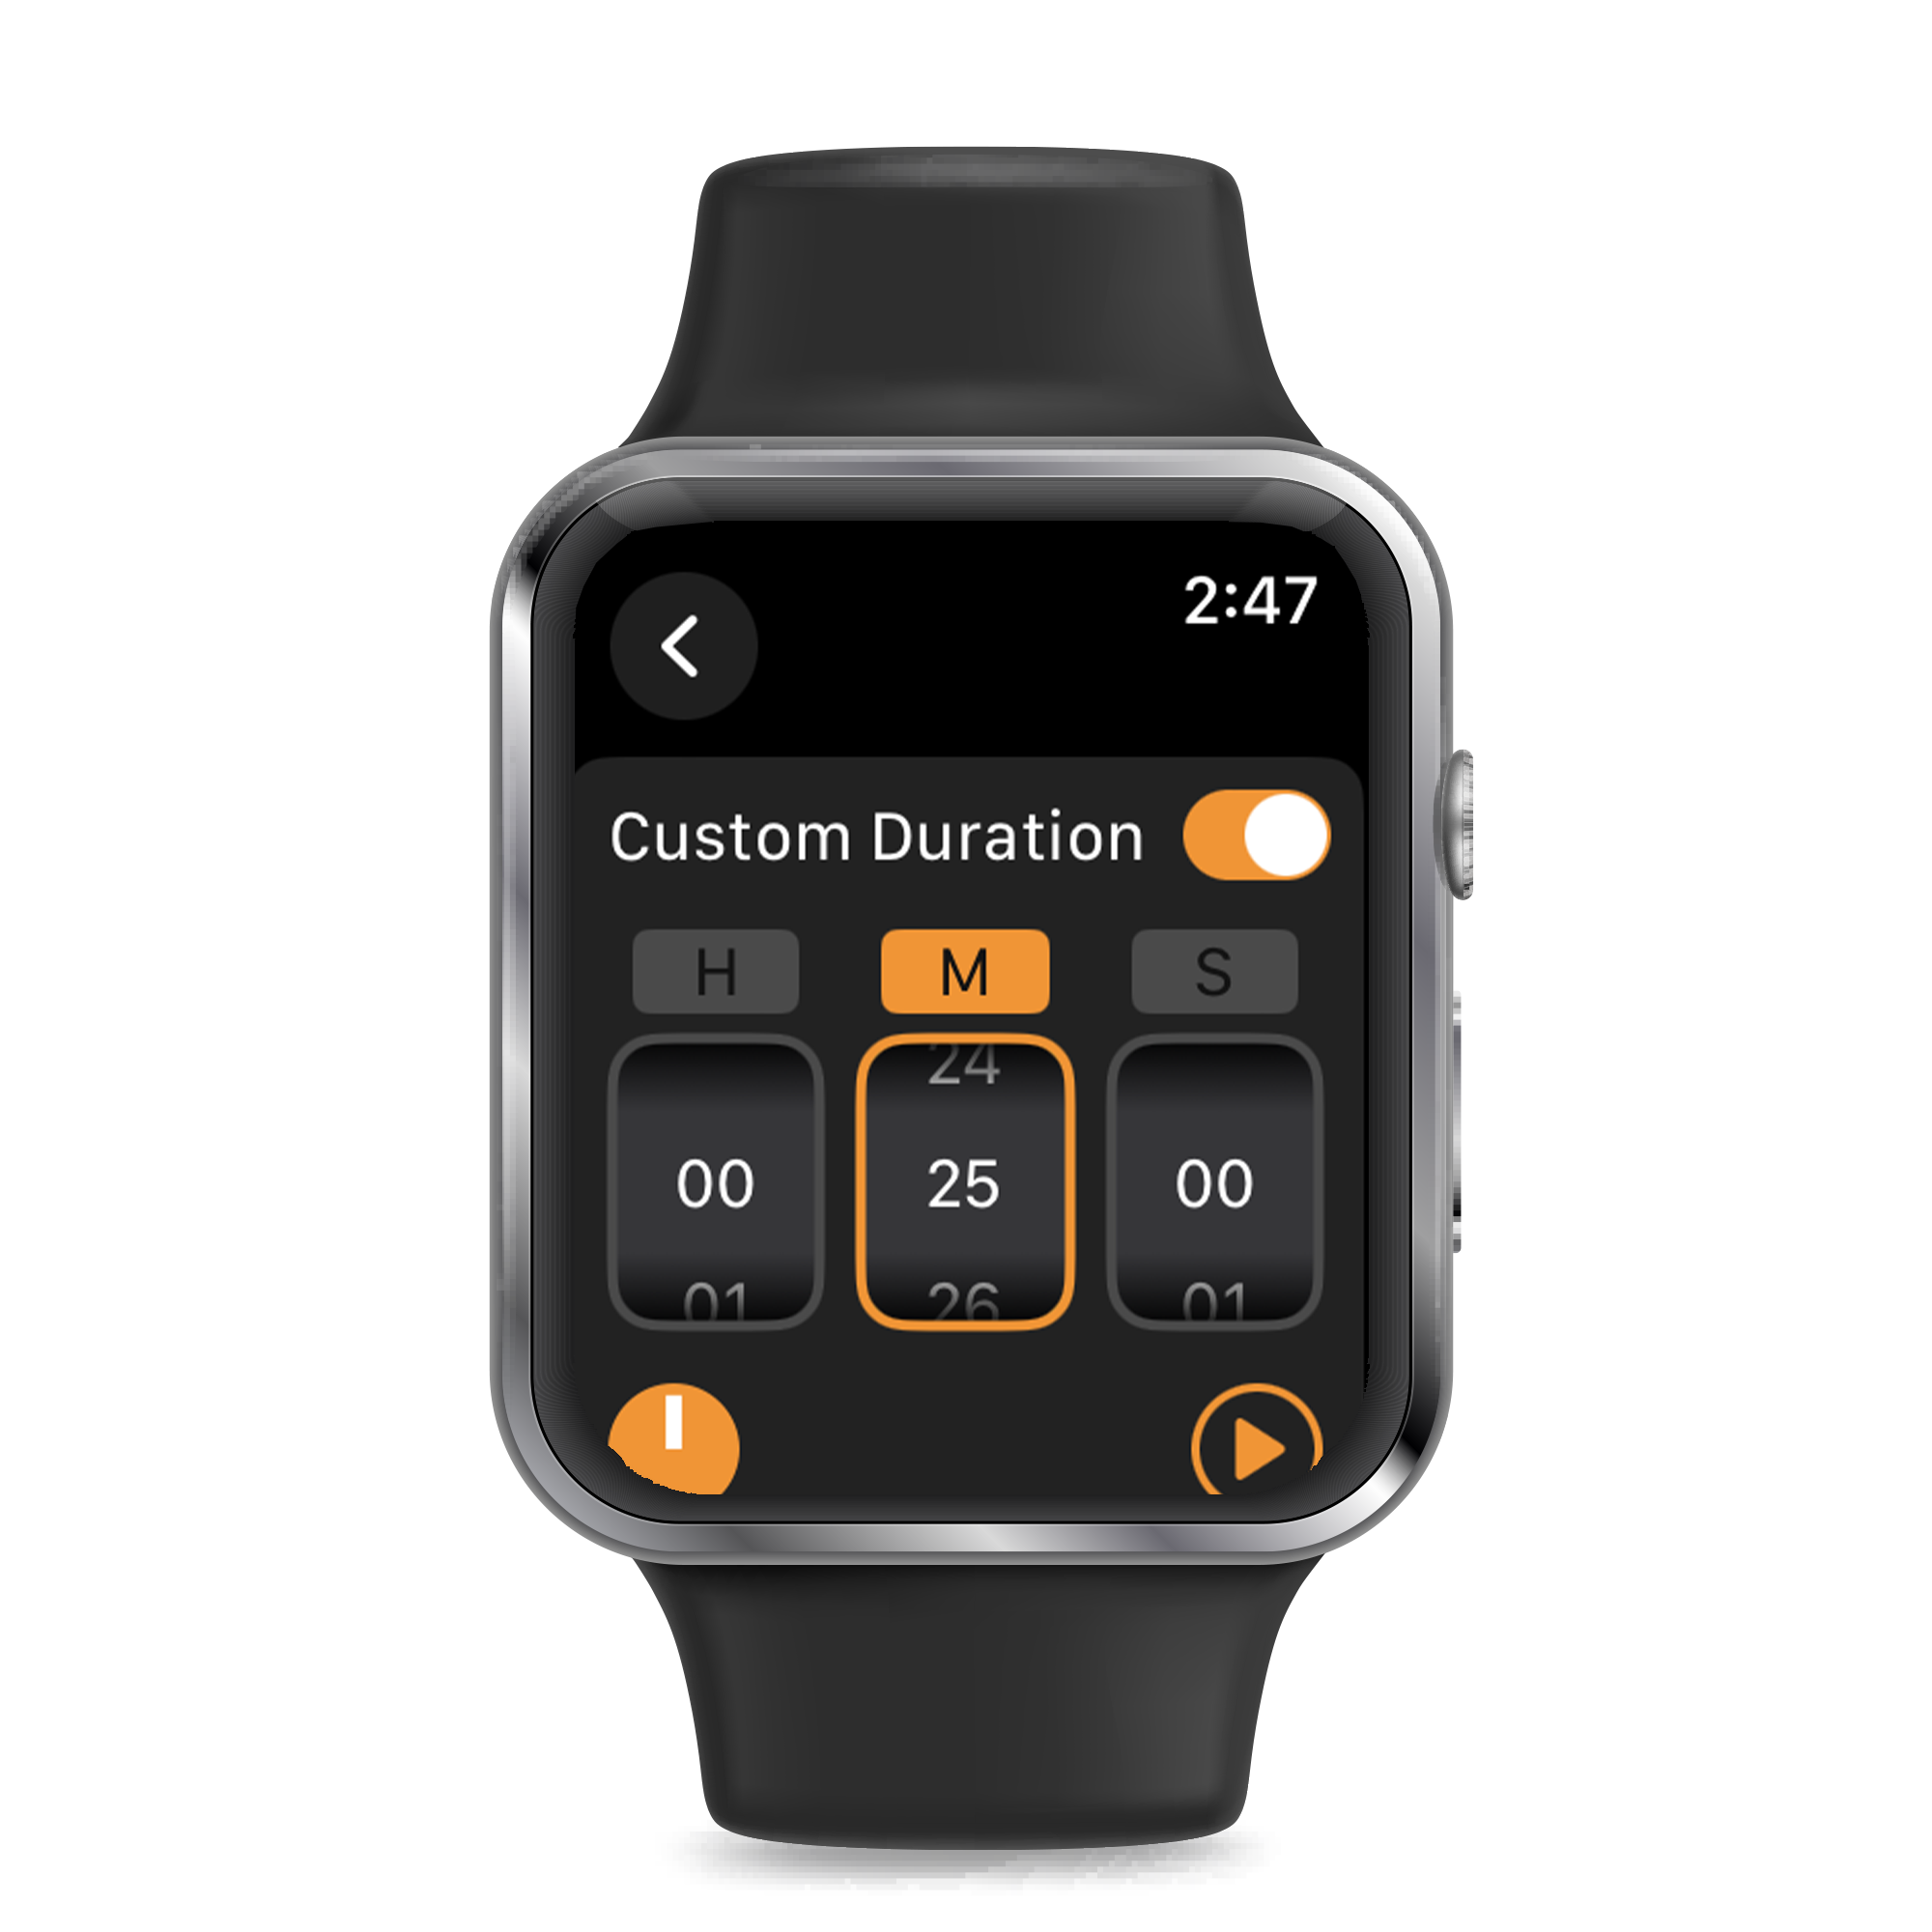 Apple Watch Timer setting